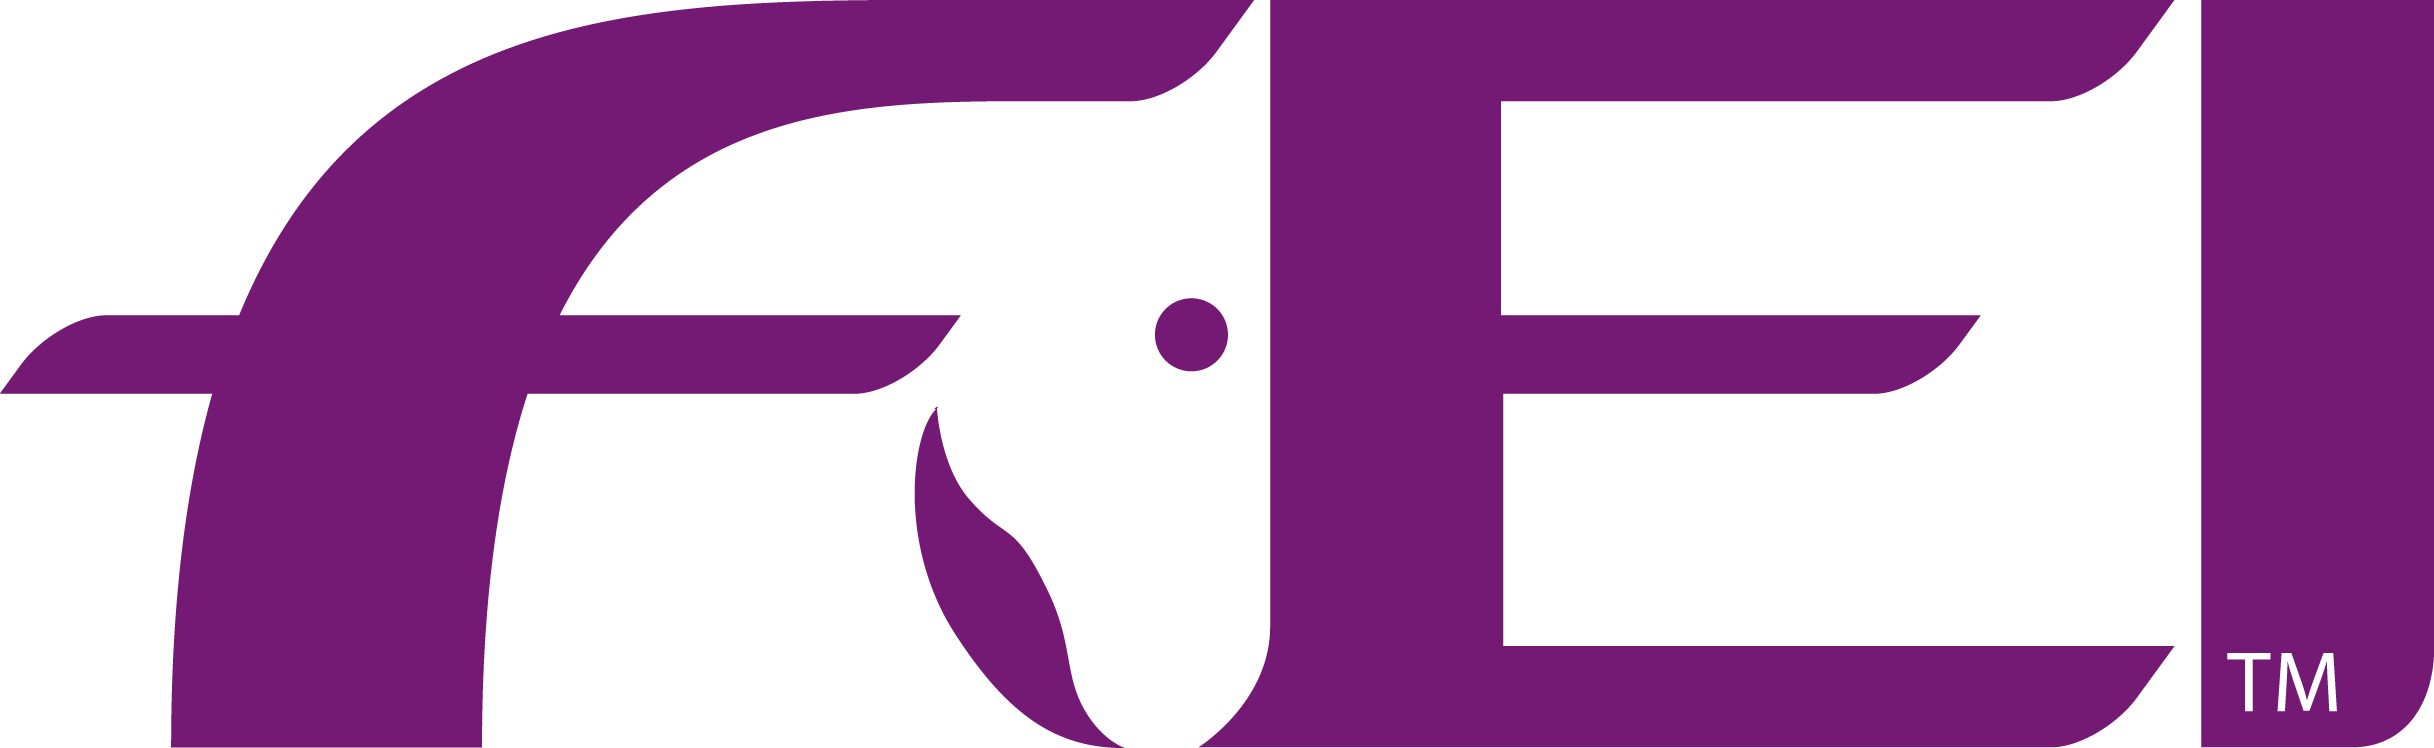 Fédération Équestre Internationale (FEI) Logo [fei.org] png